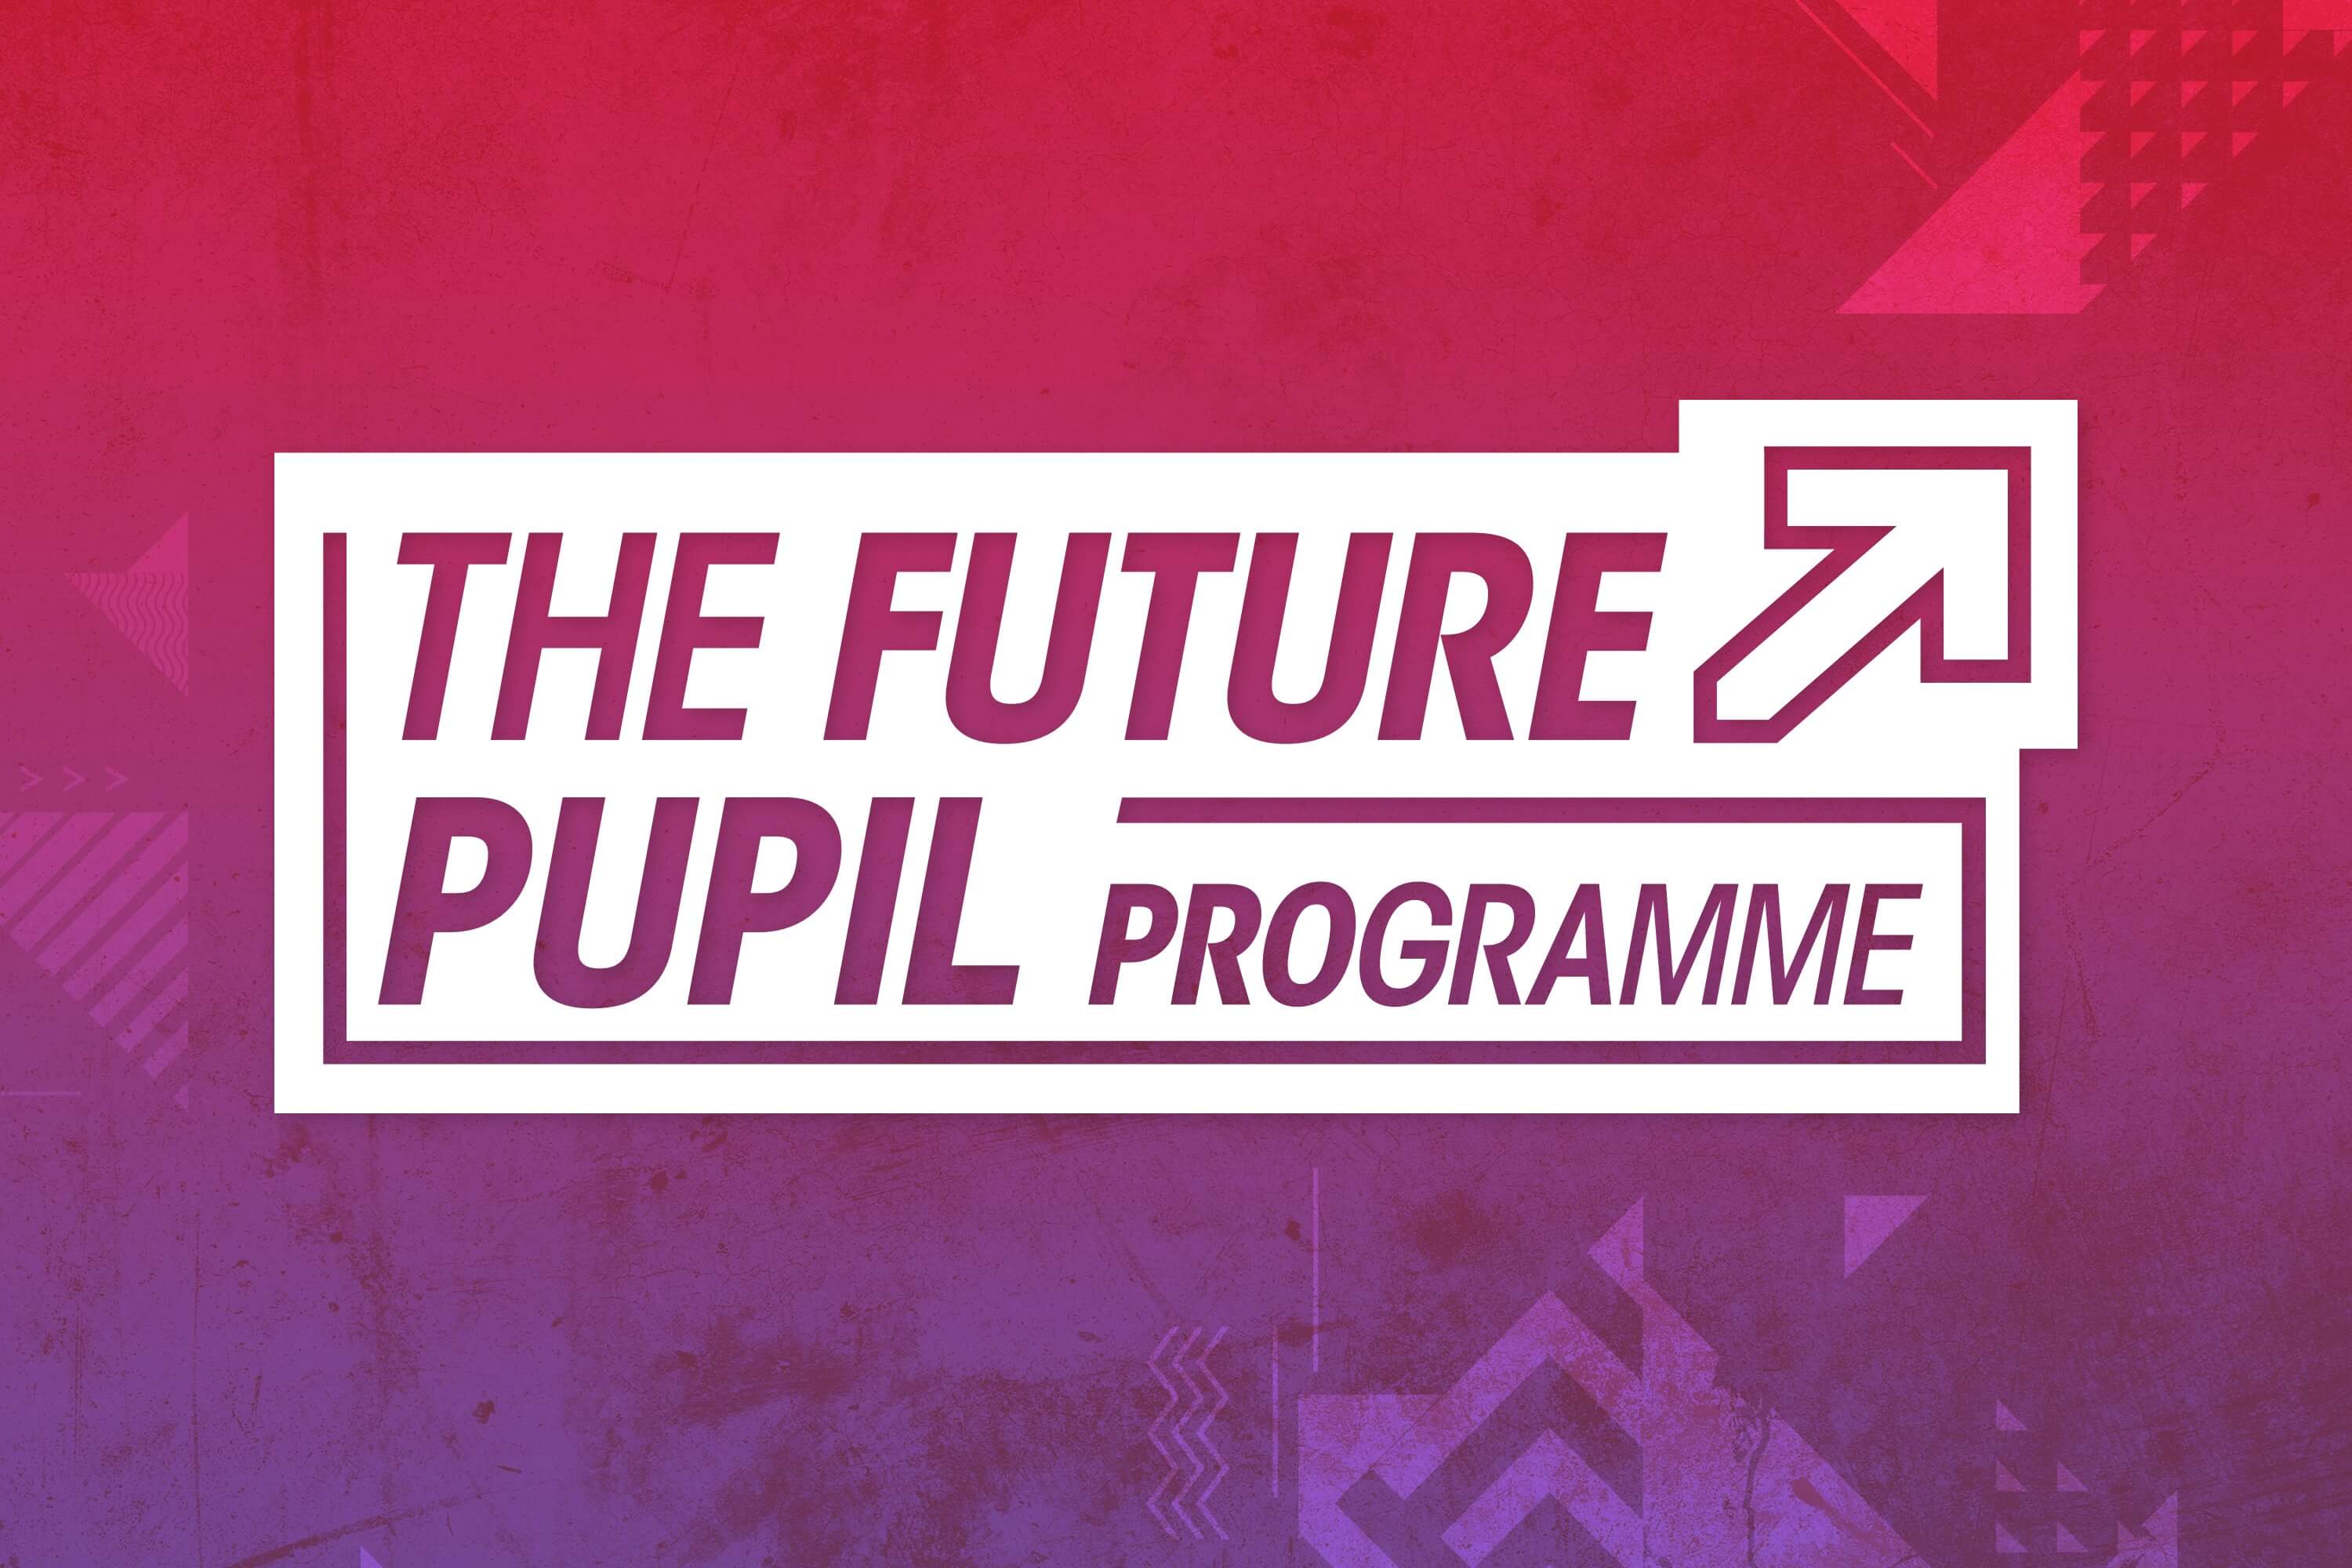 The Future Pupil Programme